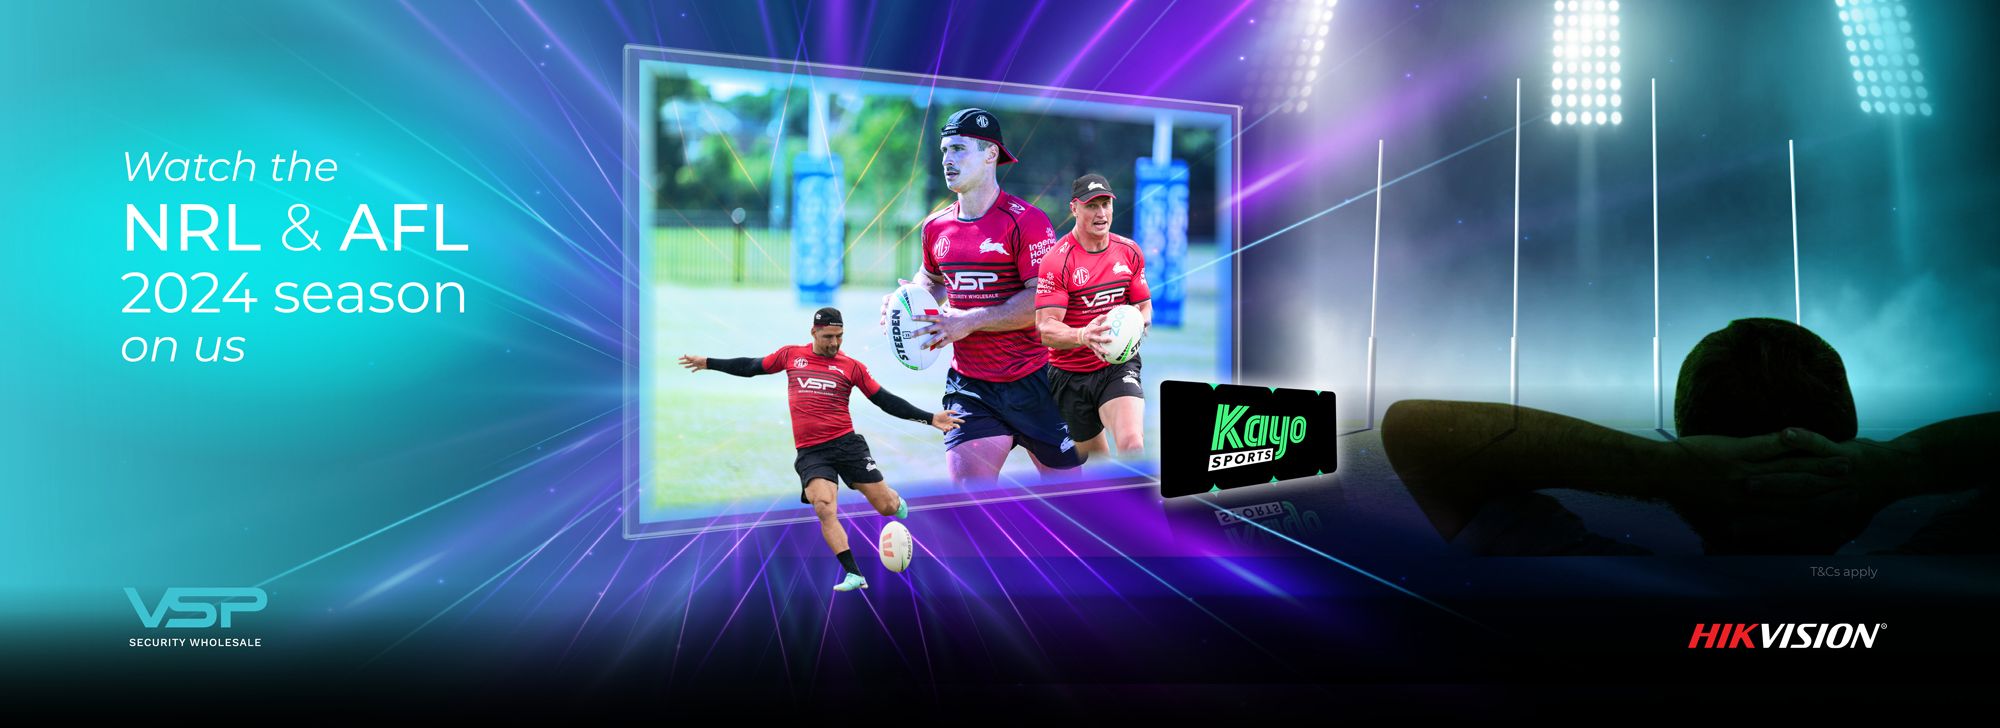 Hikvision kayo sport promo